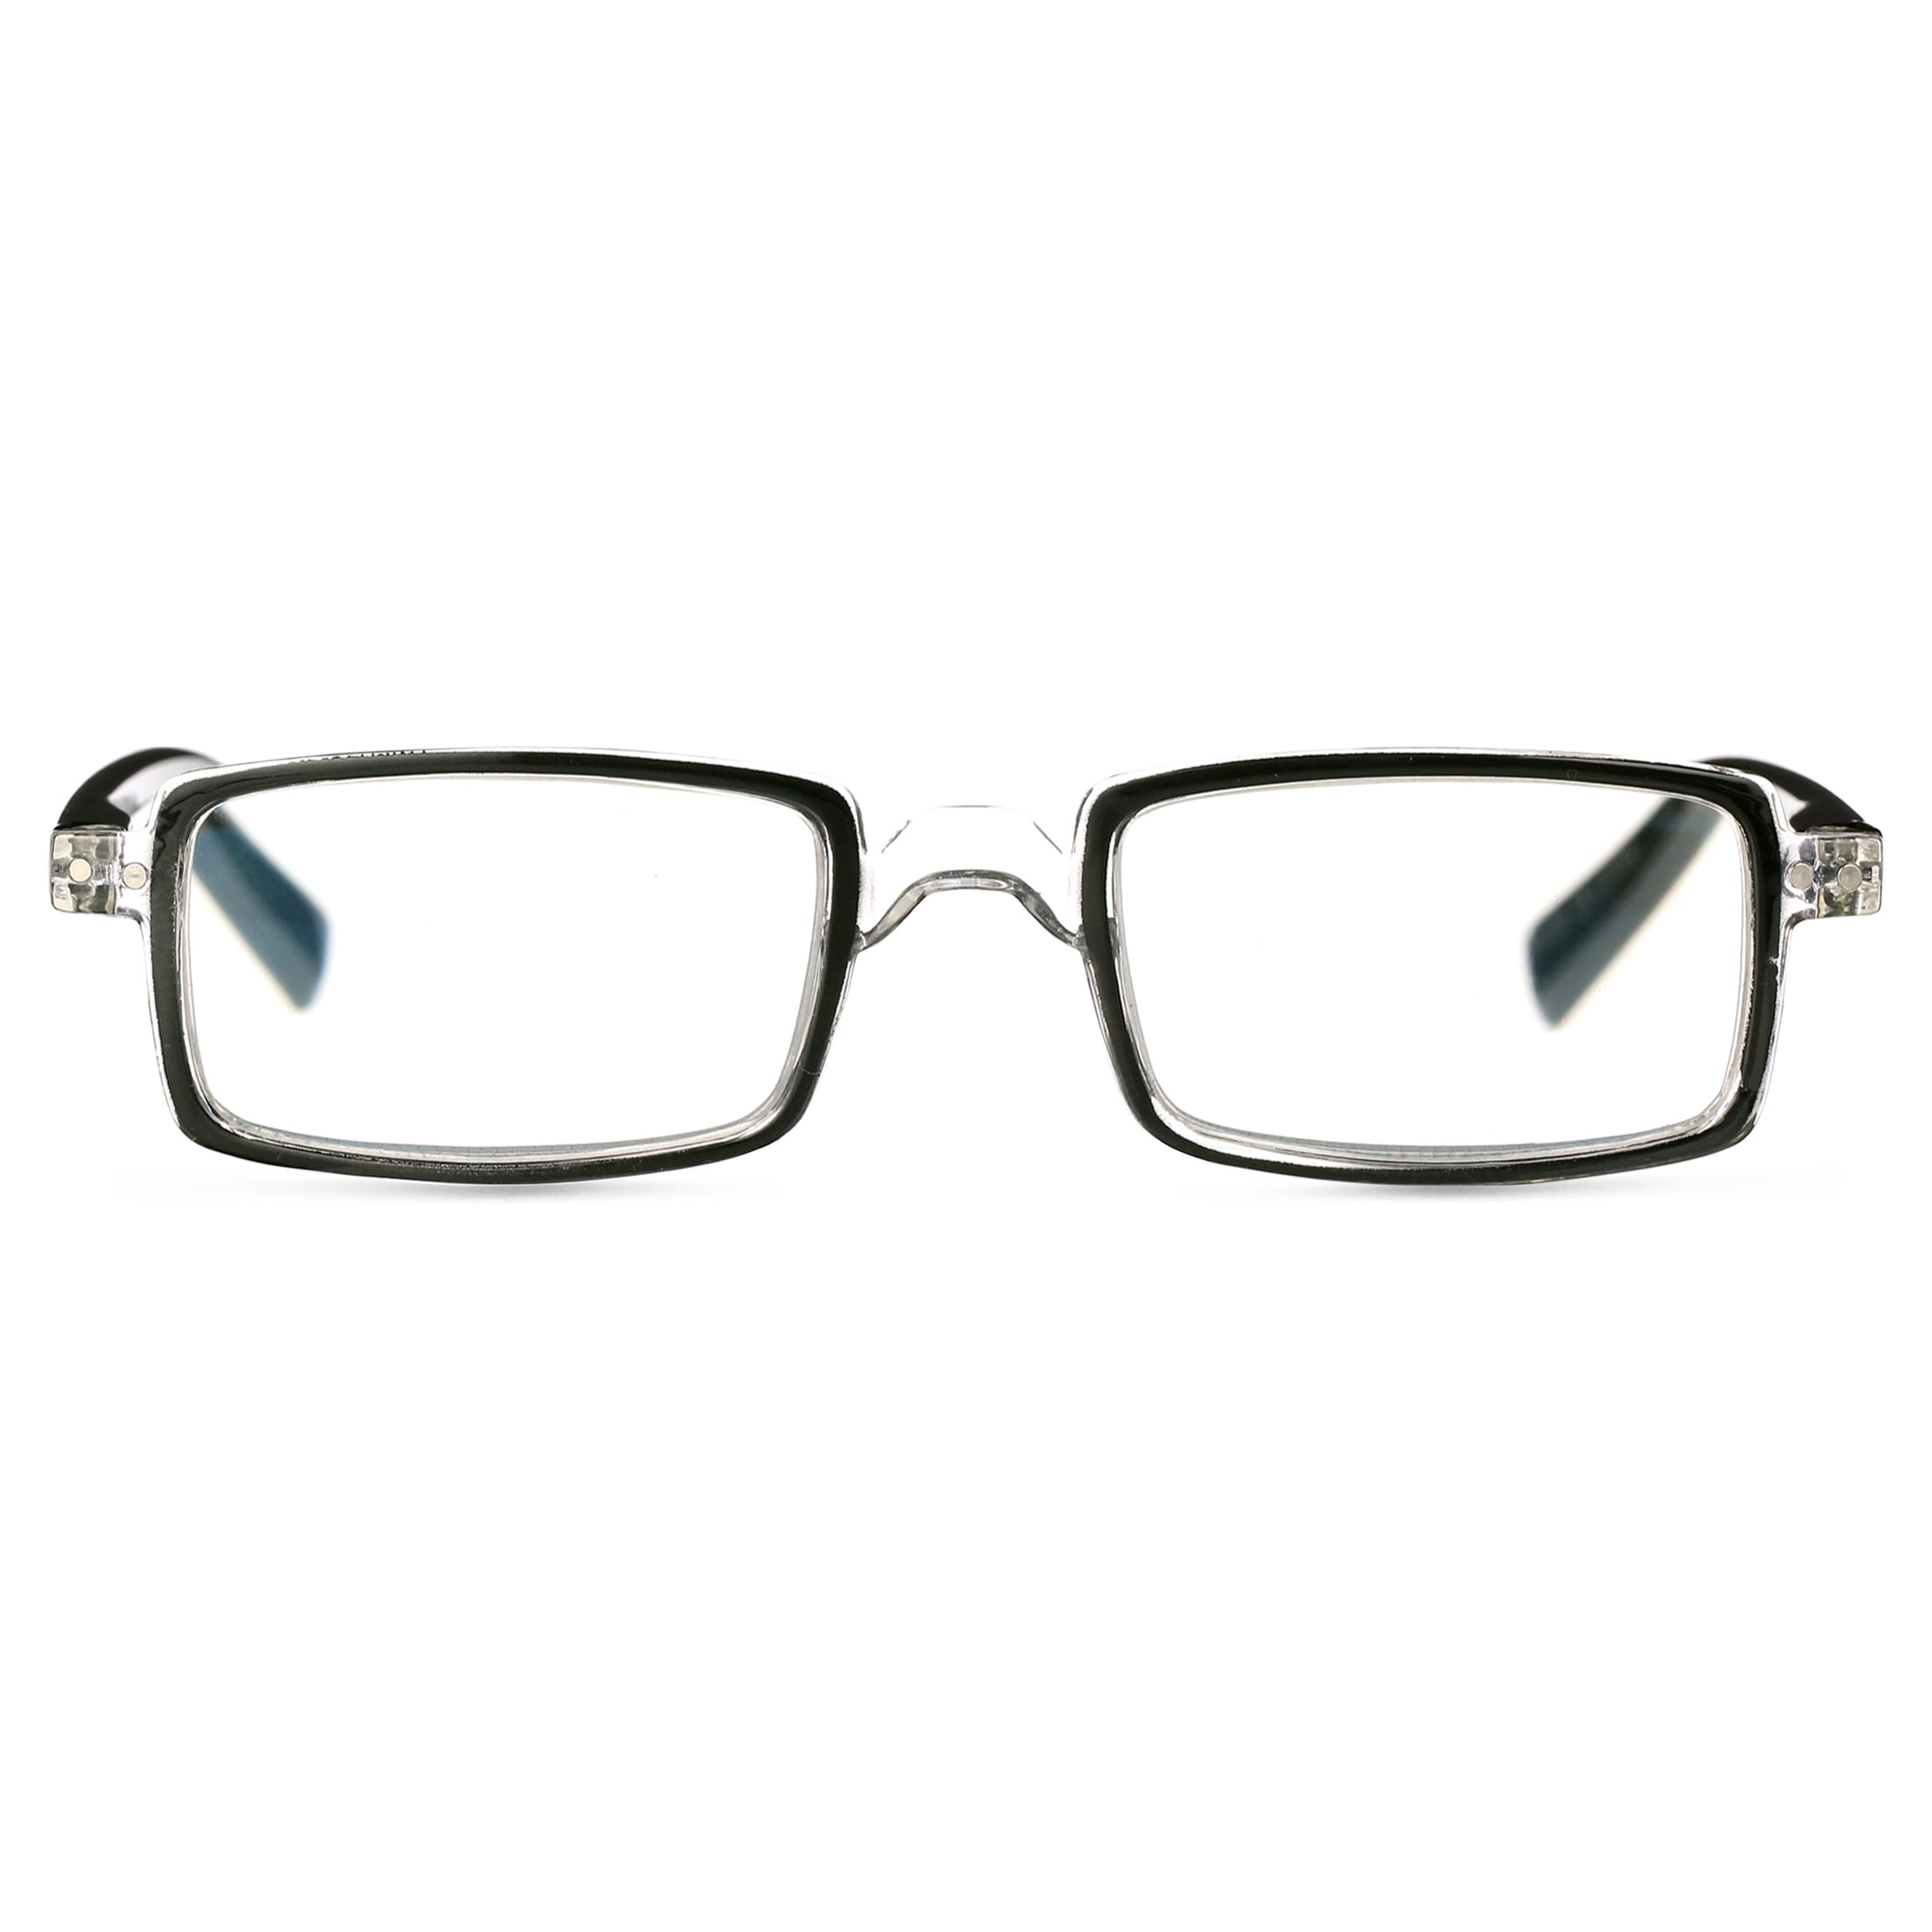 Elton John Eyewear Pop Spec Collection Turquoise Remix Readers +1.25